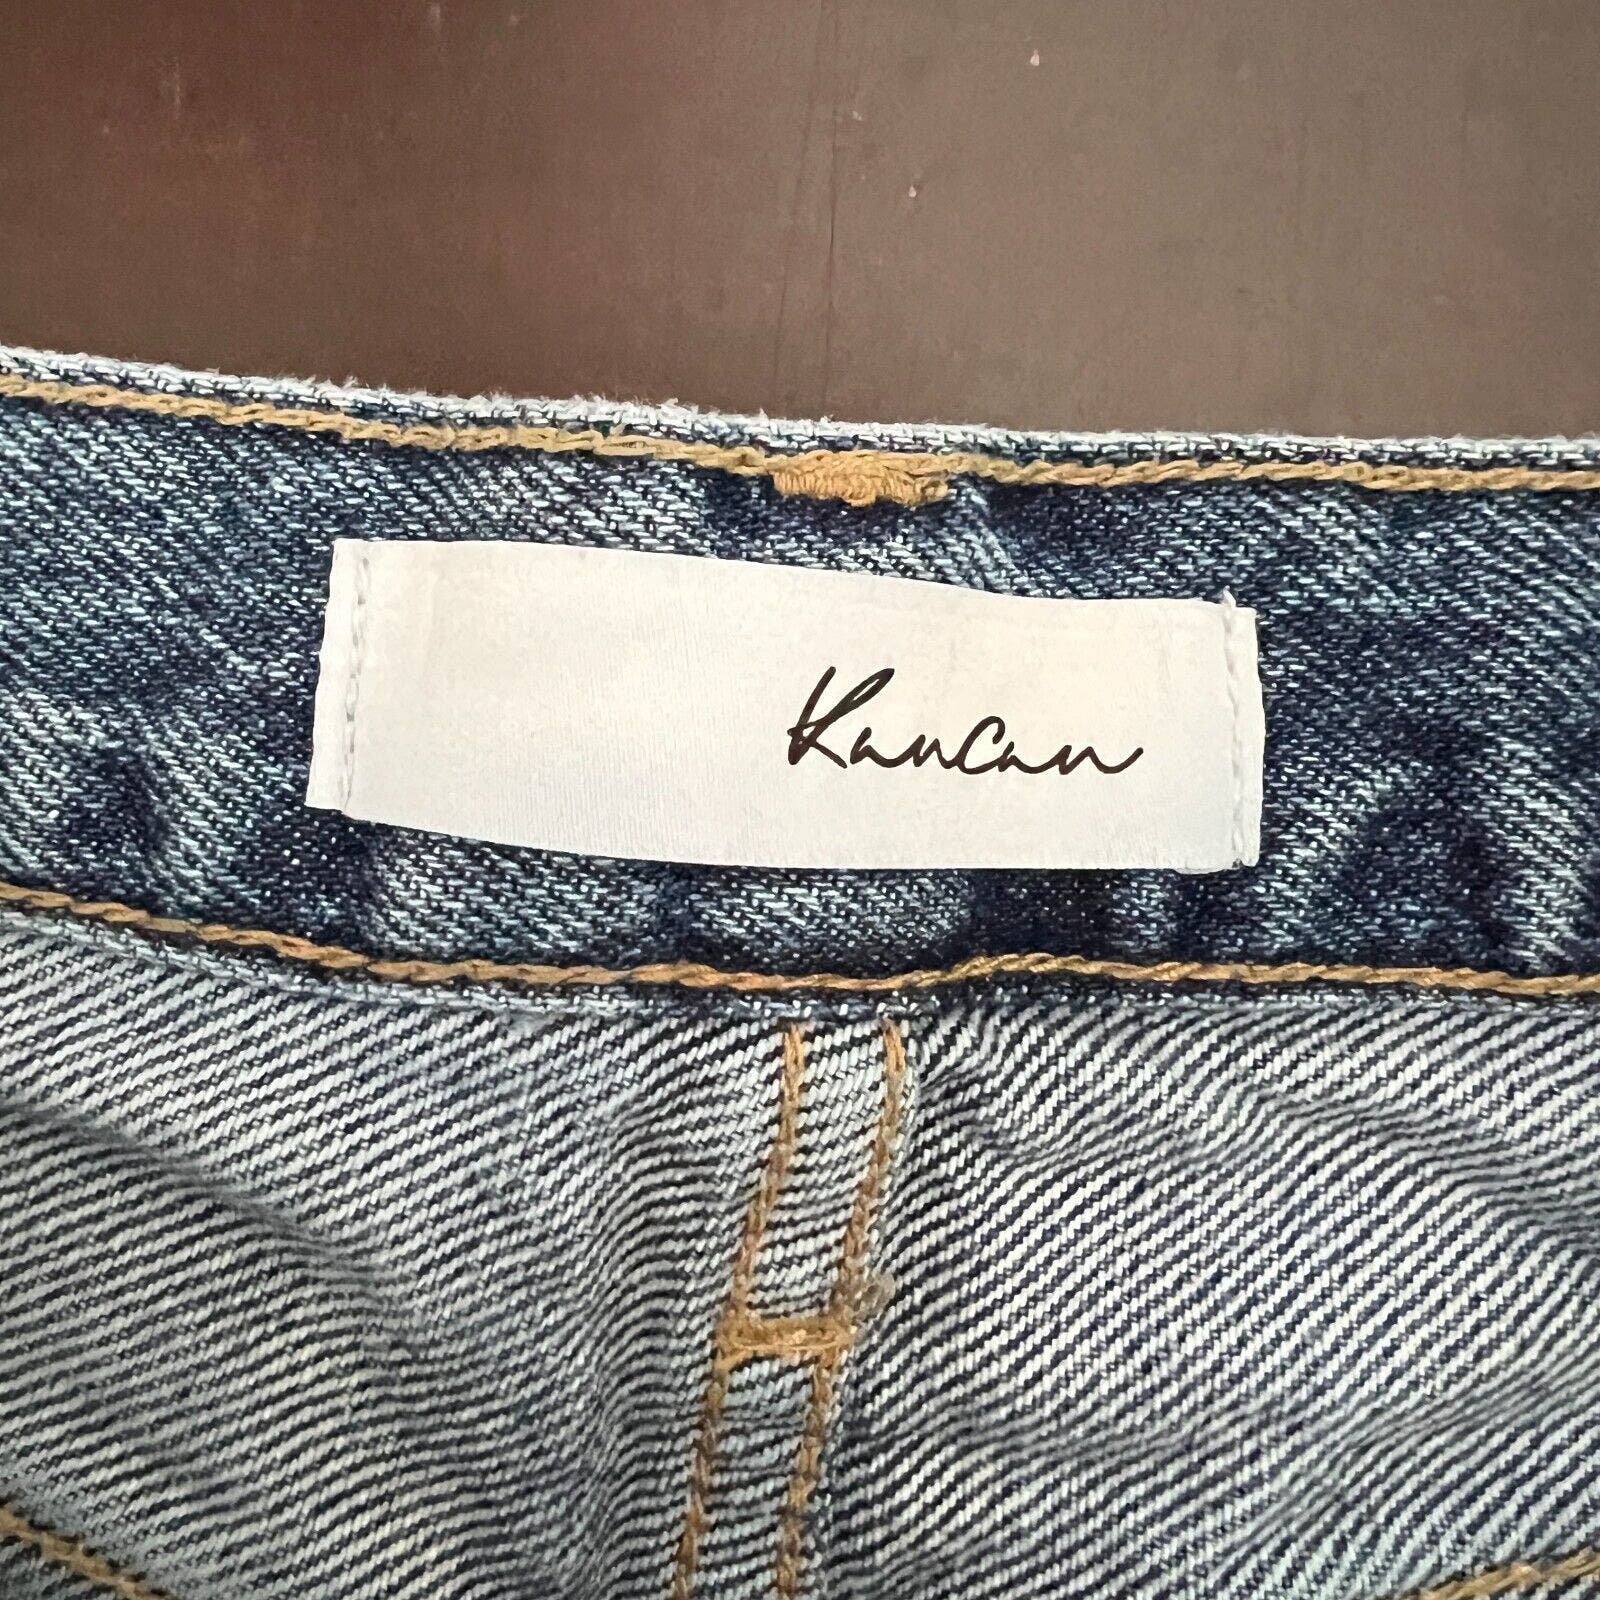 floor price Kancan Quincy High Rise Dad Jeans Blue 100% Cotton Denim Women´s Size 5/26 JsdcqNrBV best sale